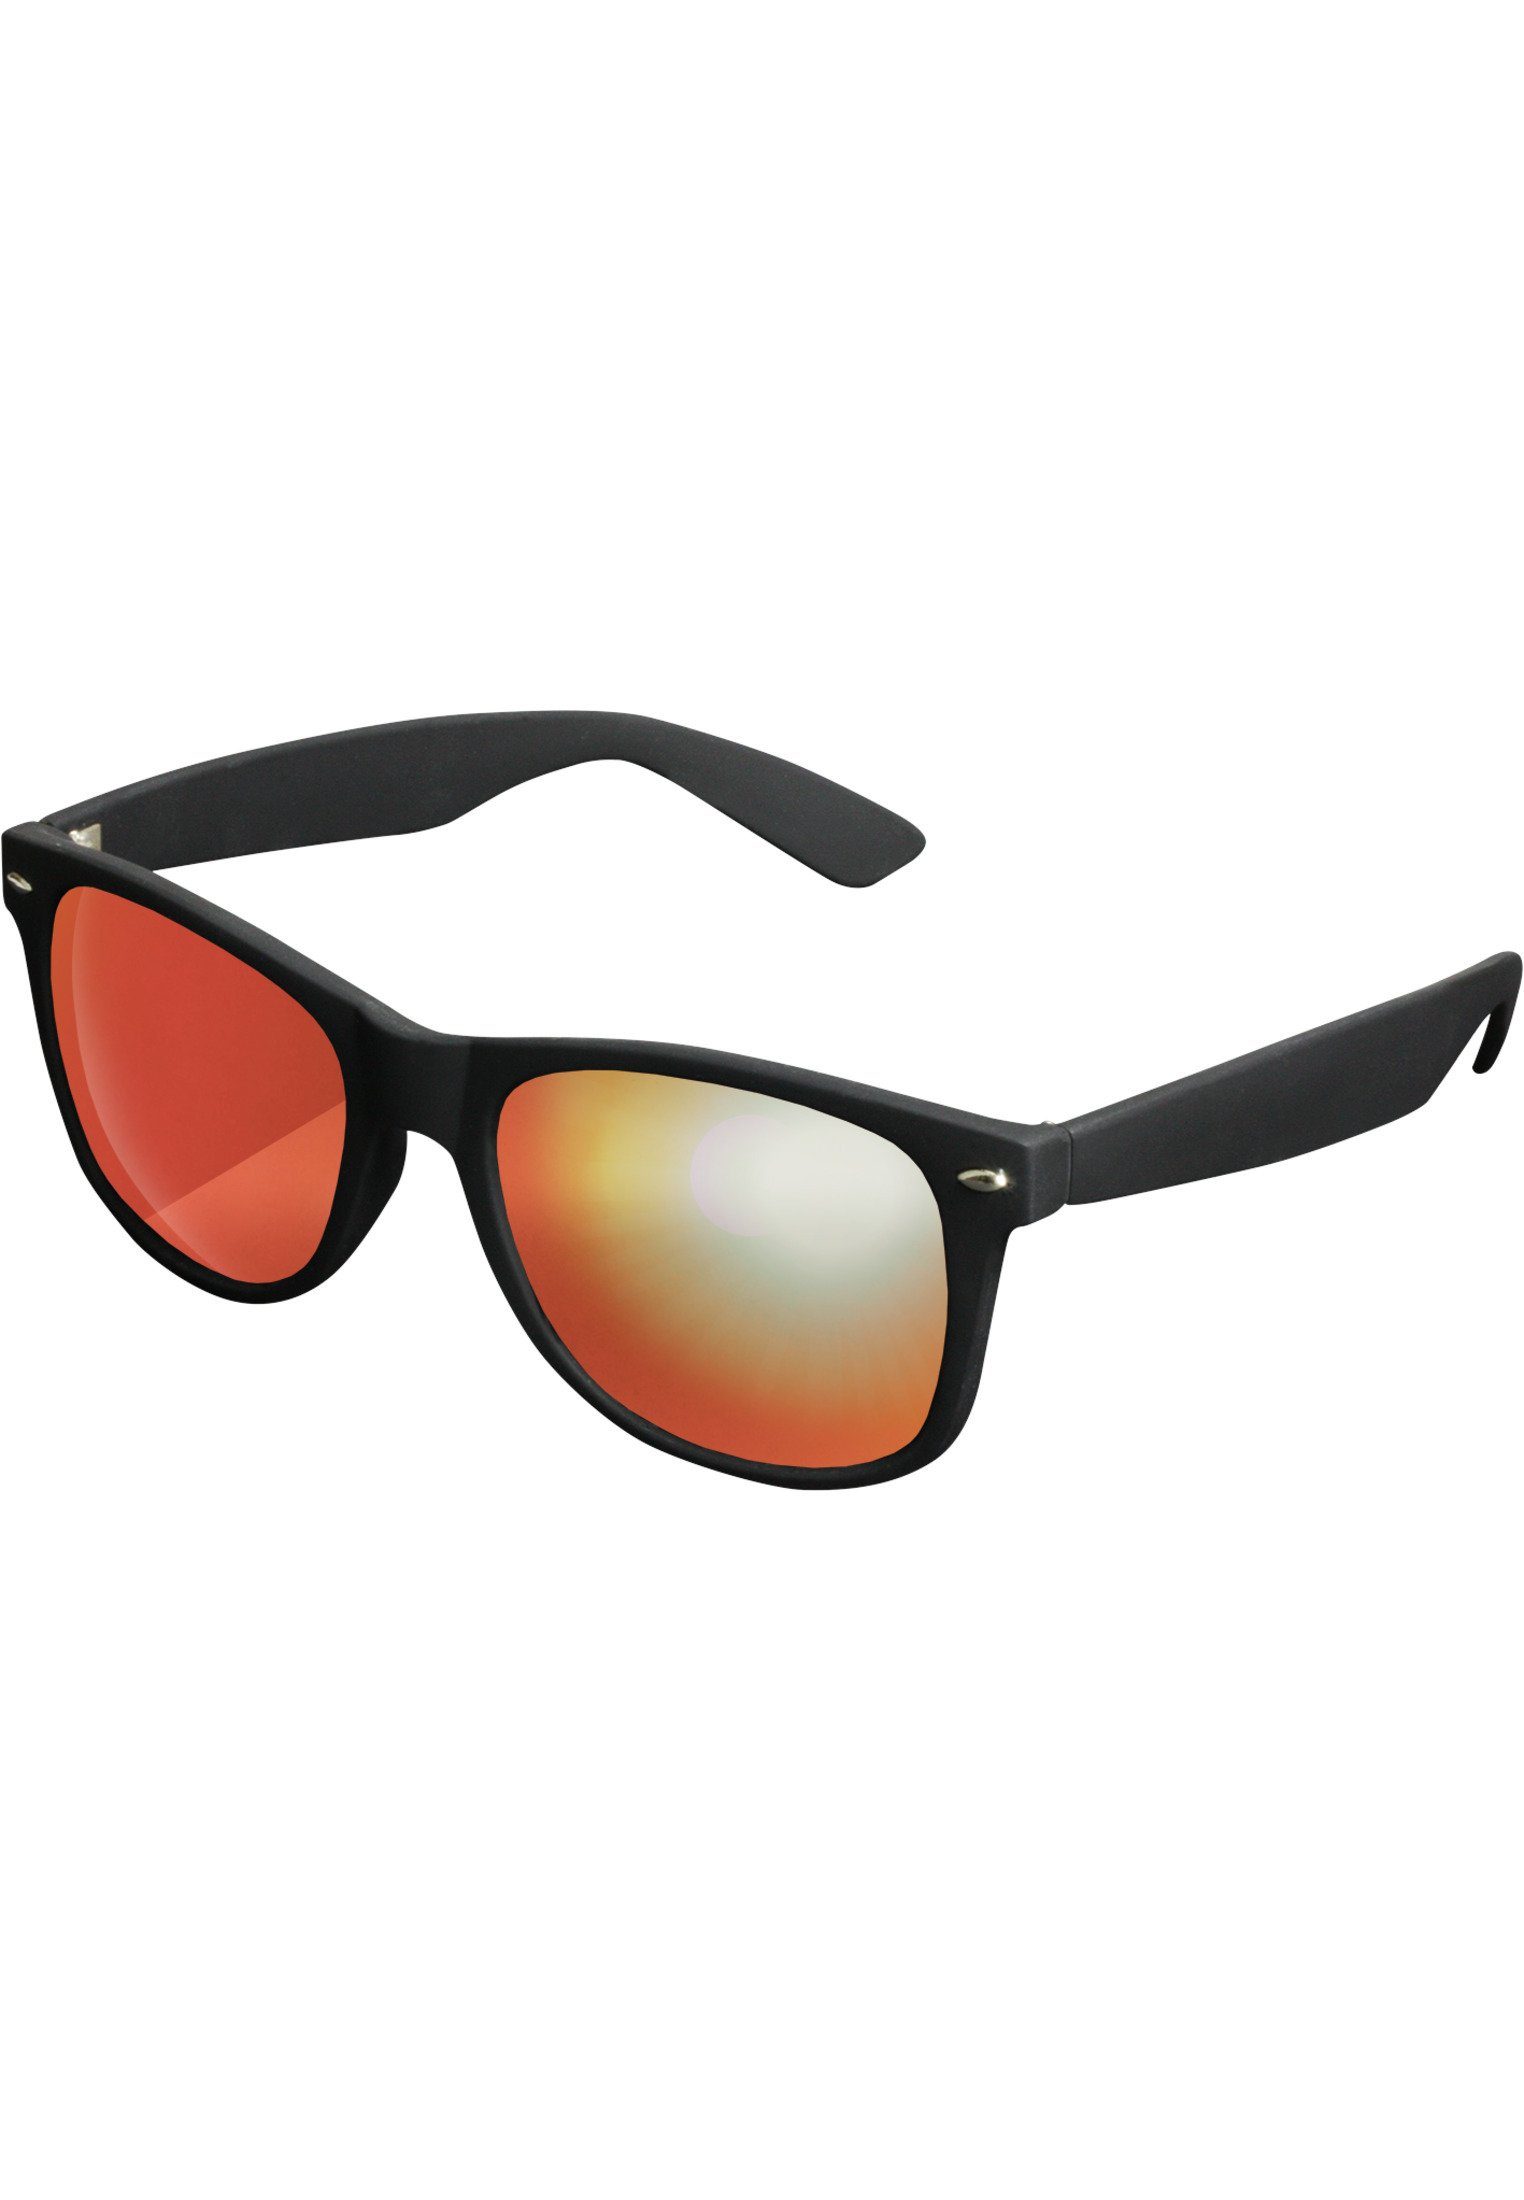 MSTRDS Sonnenbrille Accessoires Sunglasses blk/red Mirror Likoma